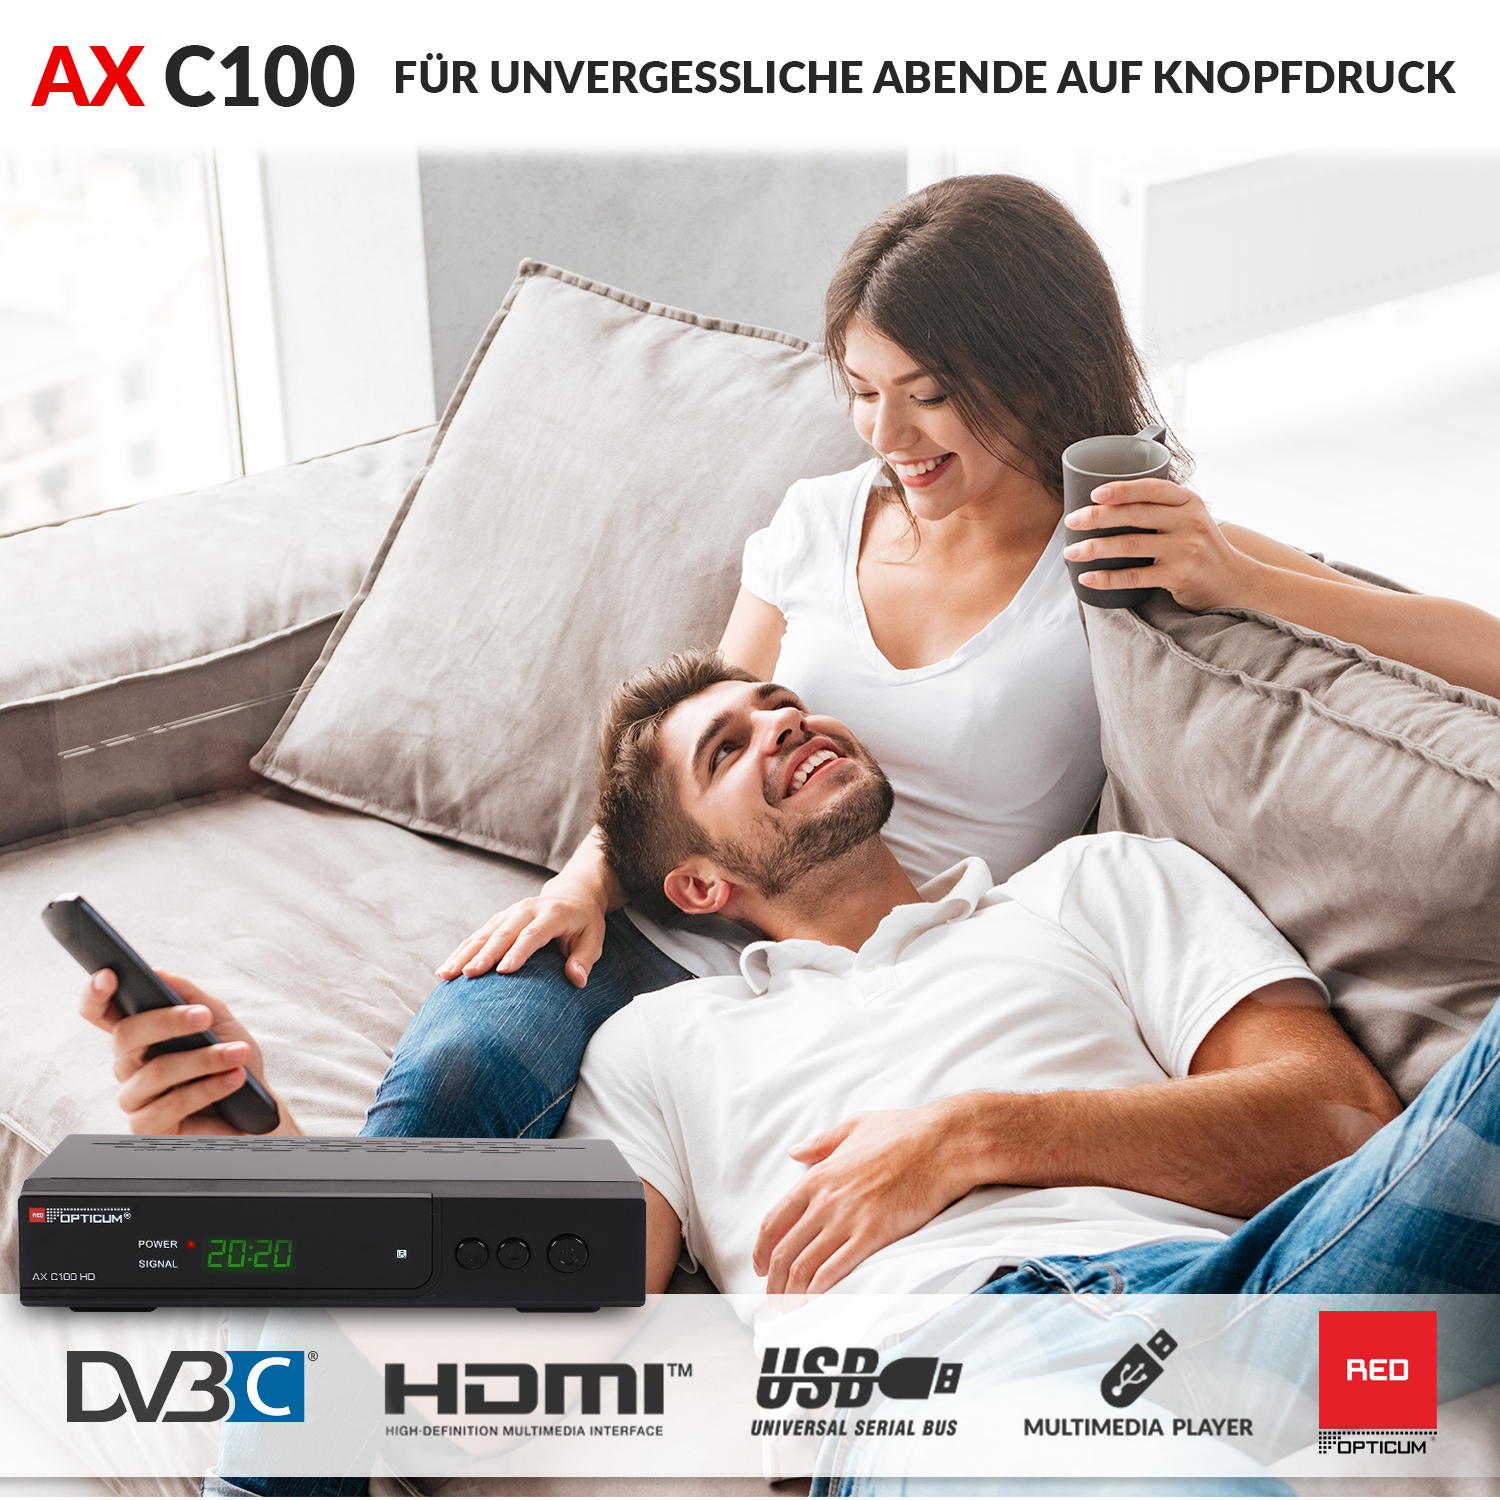 RED OPTICUM AX C100 HD- Digitaler -SCART mit I schwarz) (HDTV, DVB-C2, Kabel-Receiver PVR-Funktion, Kabelreceiver DVB-C DVB-C, HD PVR-Aufnahmefunktion EPG-HDMI-USB Receiver